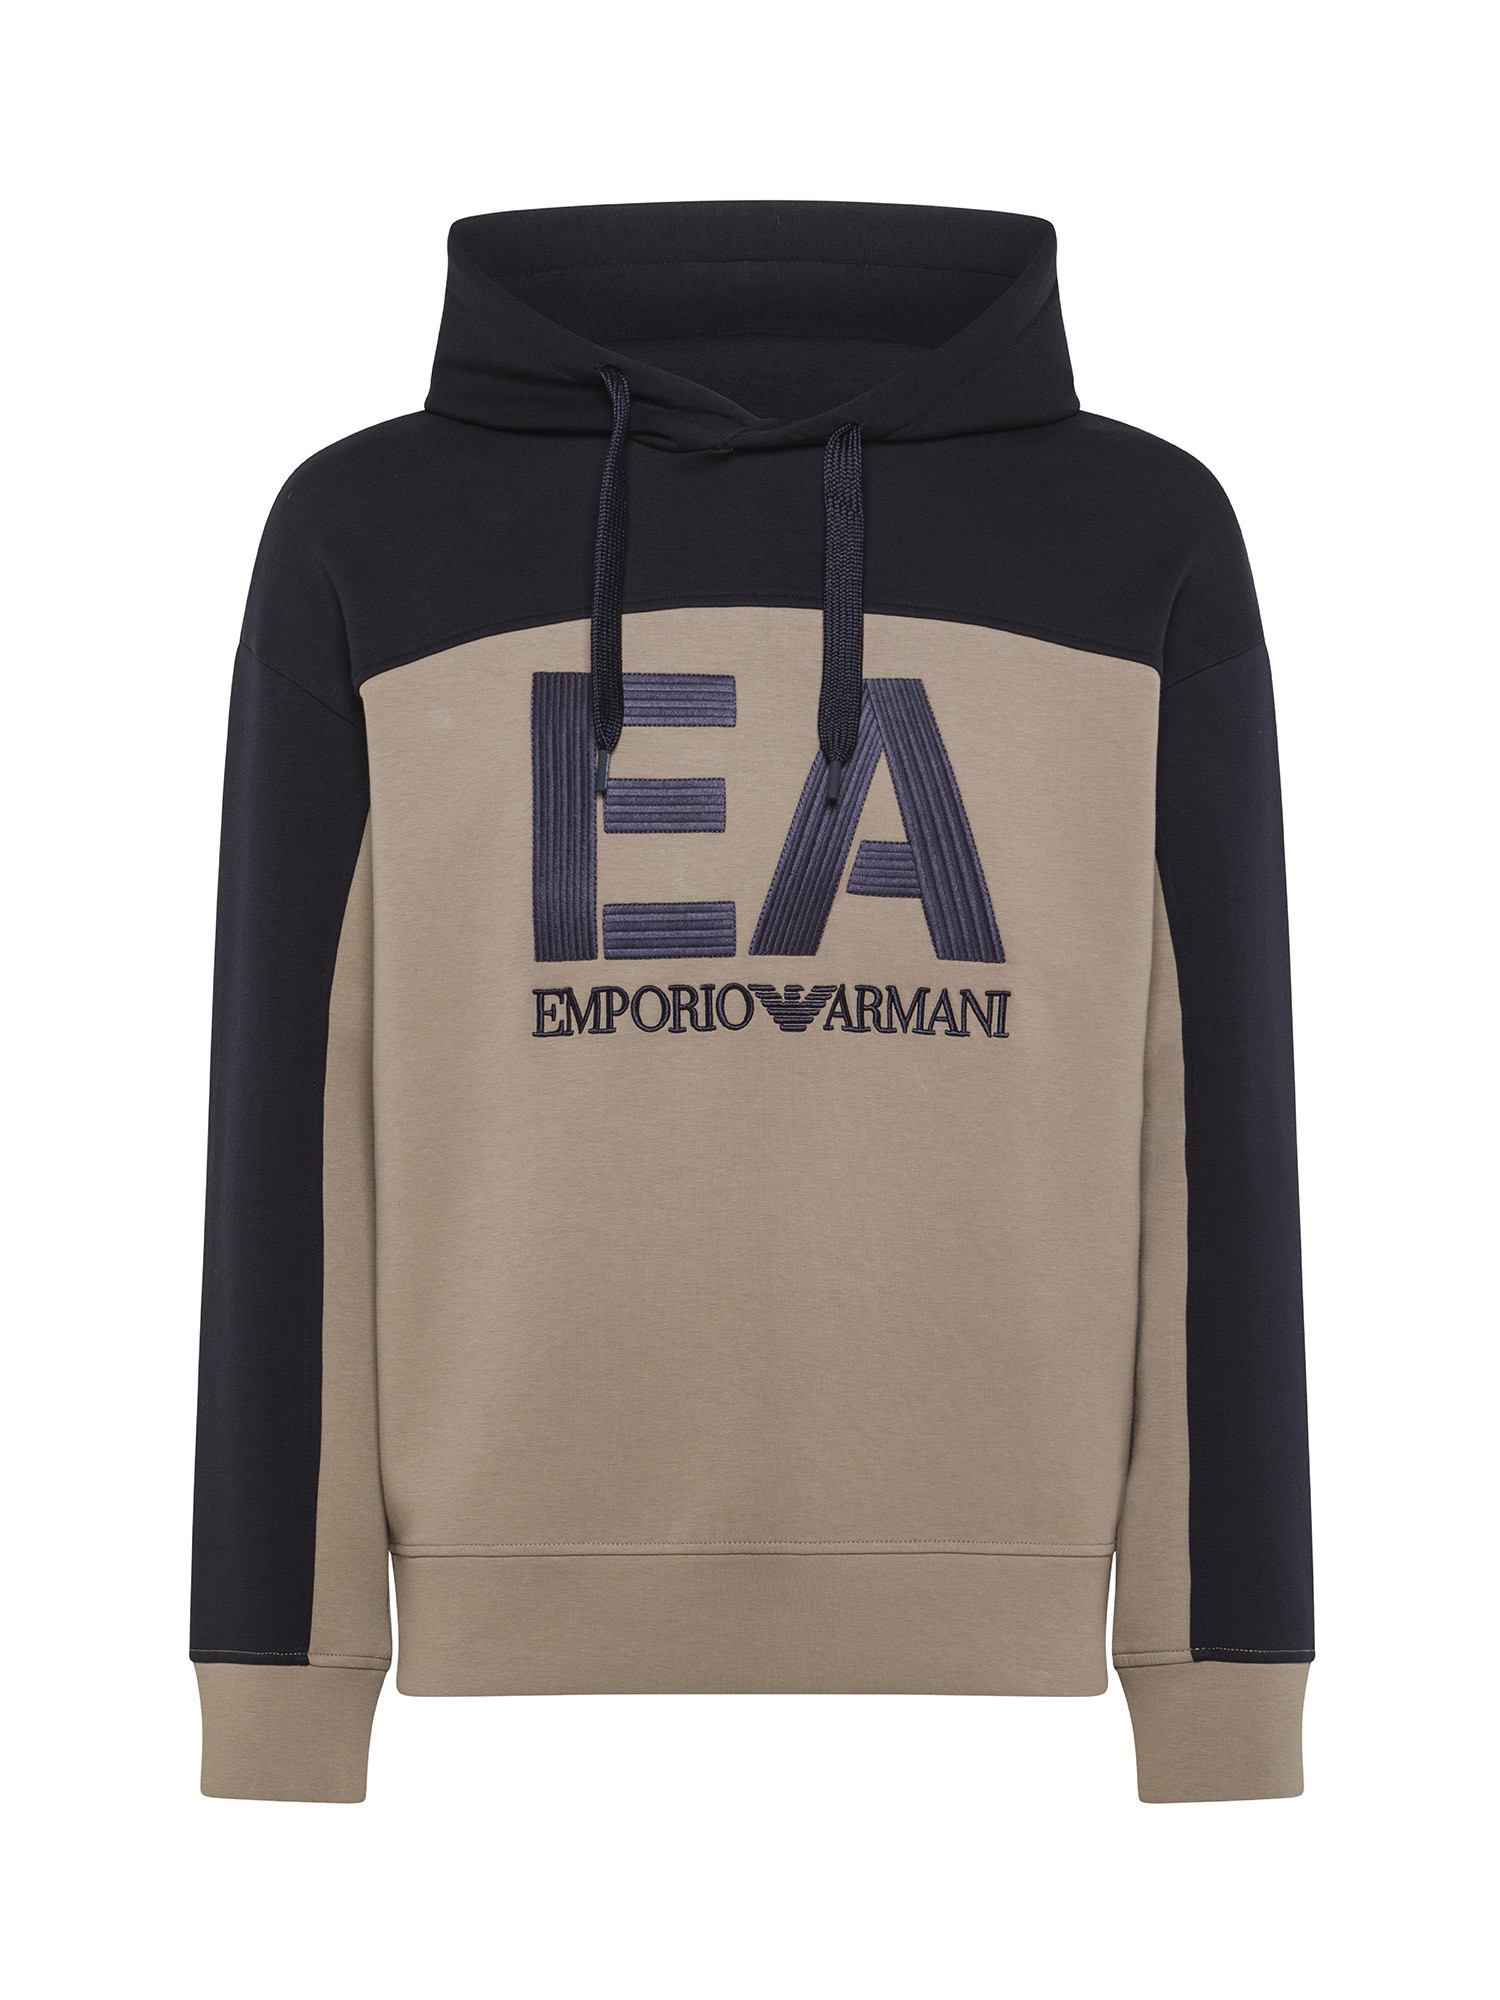 Emporio Armani - Sweatshirt with hood and logo, Beige, large image number 0